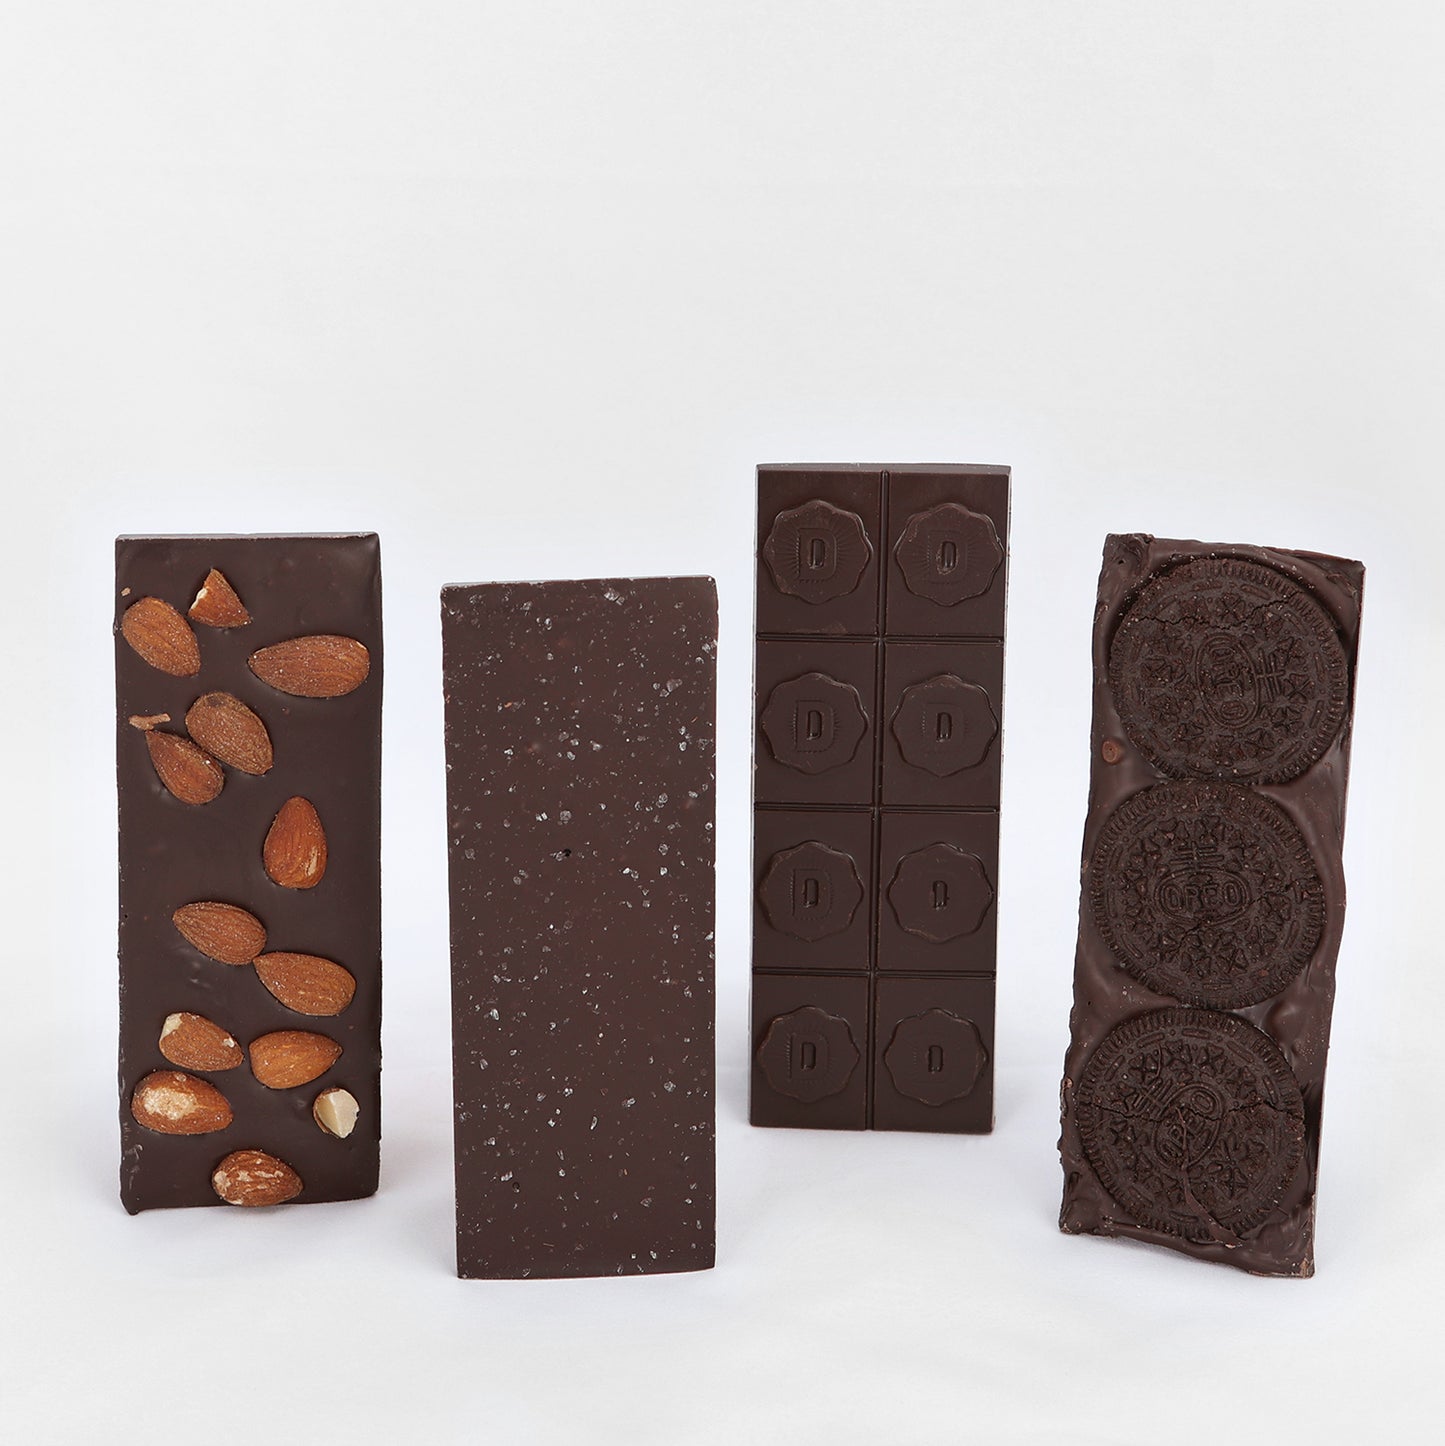 Four dairy-less Deiter's chocolate bars, almond, sea salt, plain and cookie